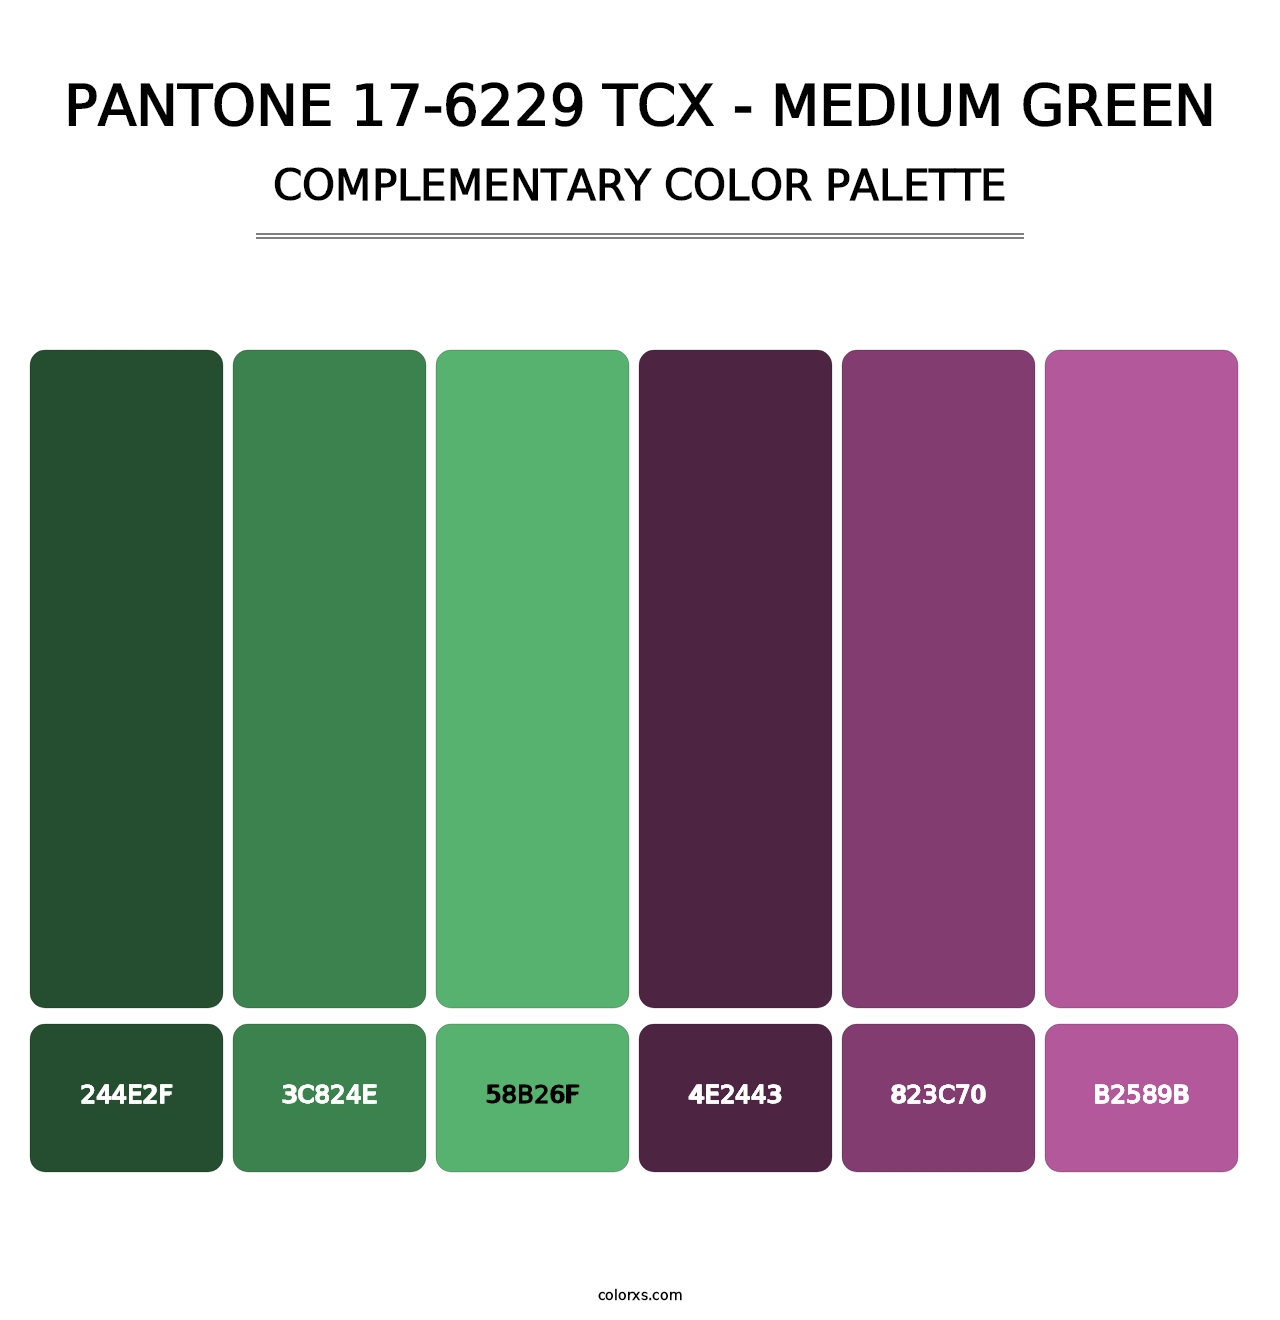 PANTONE 17-6229 TCX - Medium Green - Complementary Color Palette